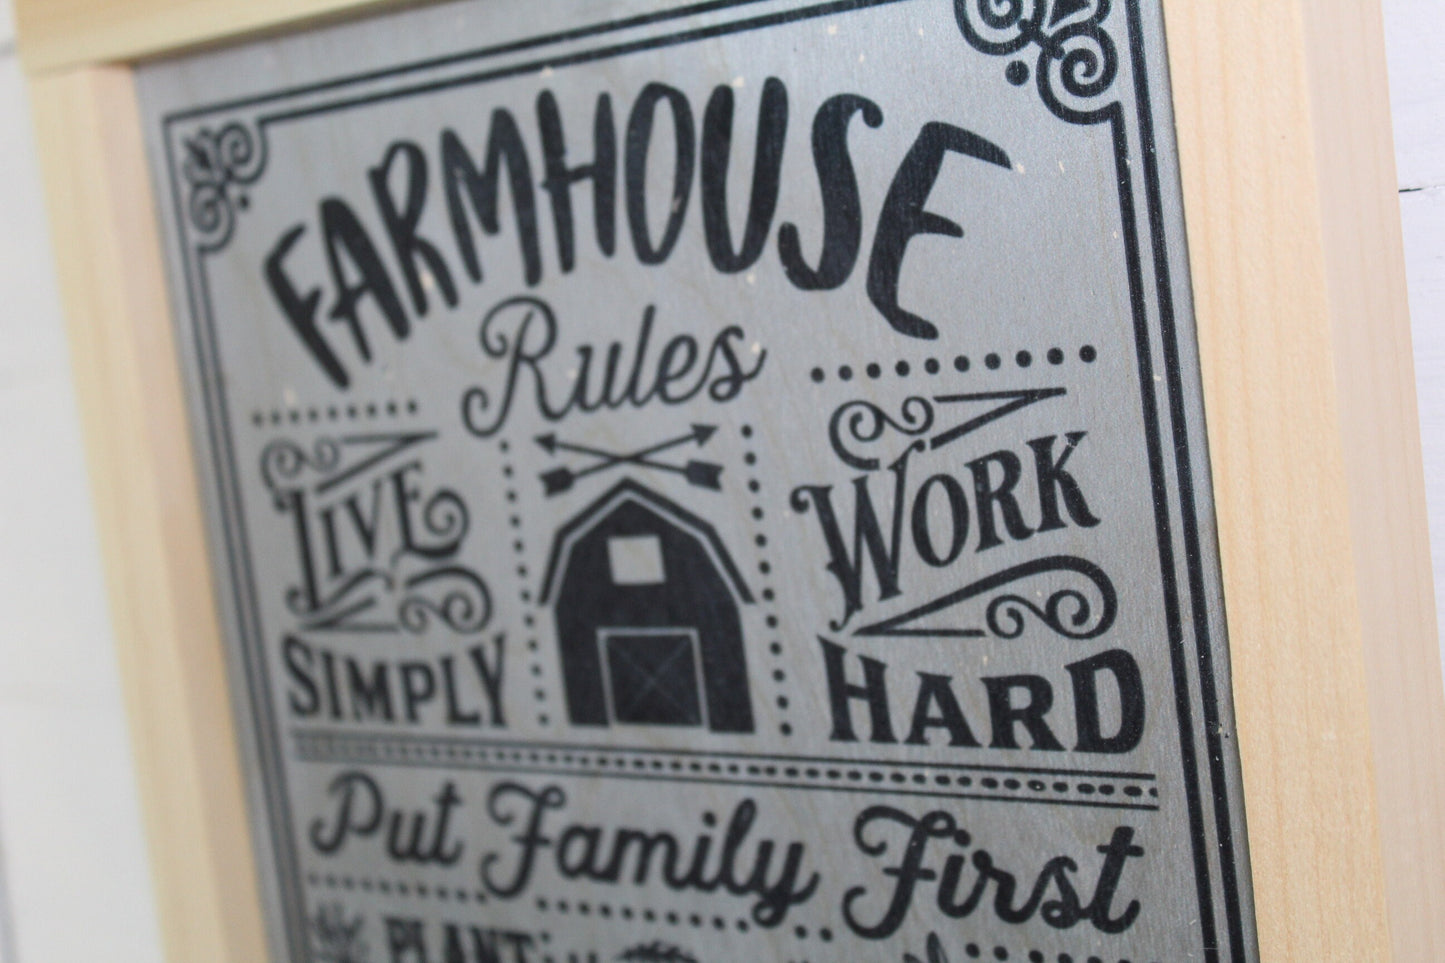 Farmhouse Rules List Wood Sign Farmer Farm Barn Plant Harvest Cow Wall Hanging Simply Work Hard Decoration Standard Principles Rustic Code